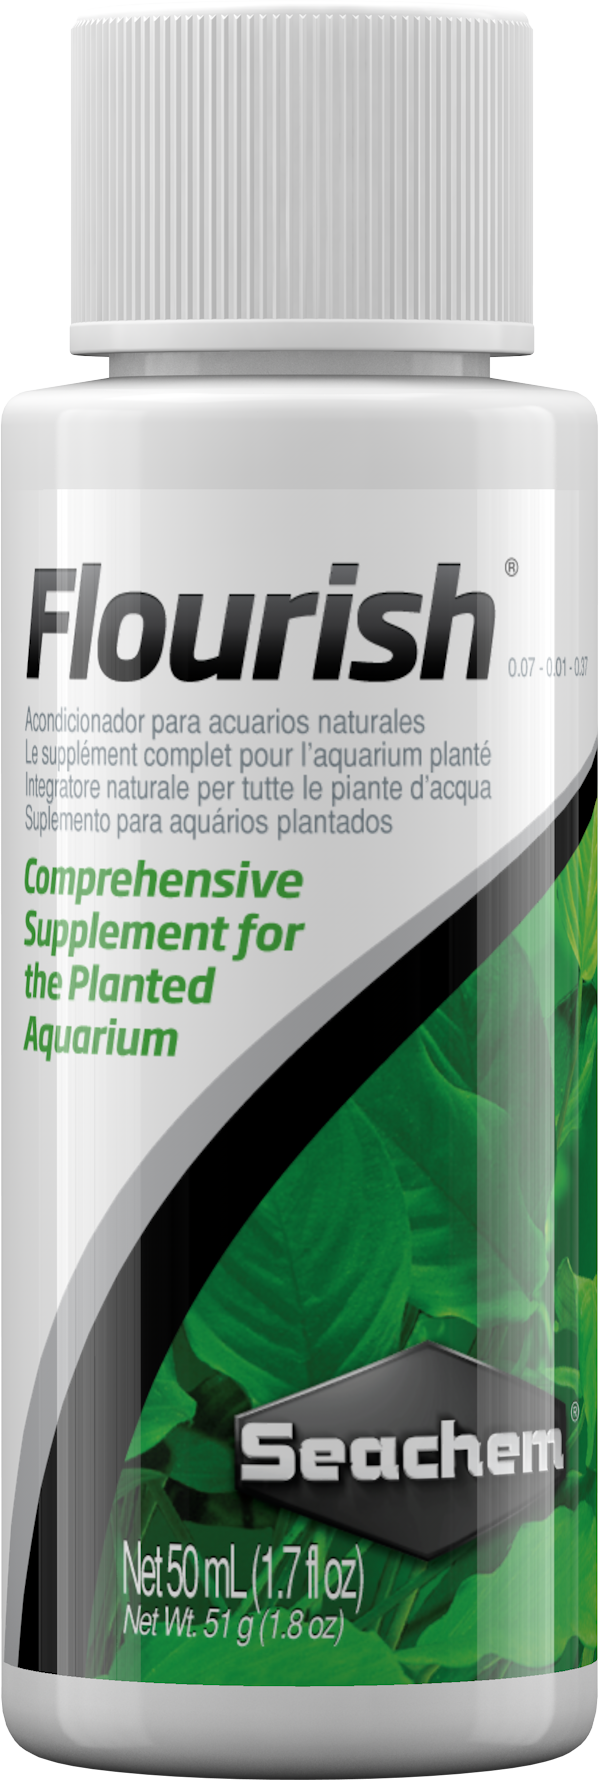 Seachem Flourish 50ml For Sale | Live Freshwater Plant Fertilizer and Supplement | Seachem laboratories